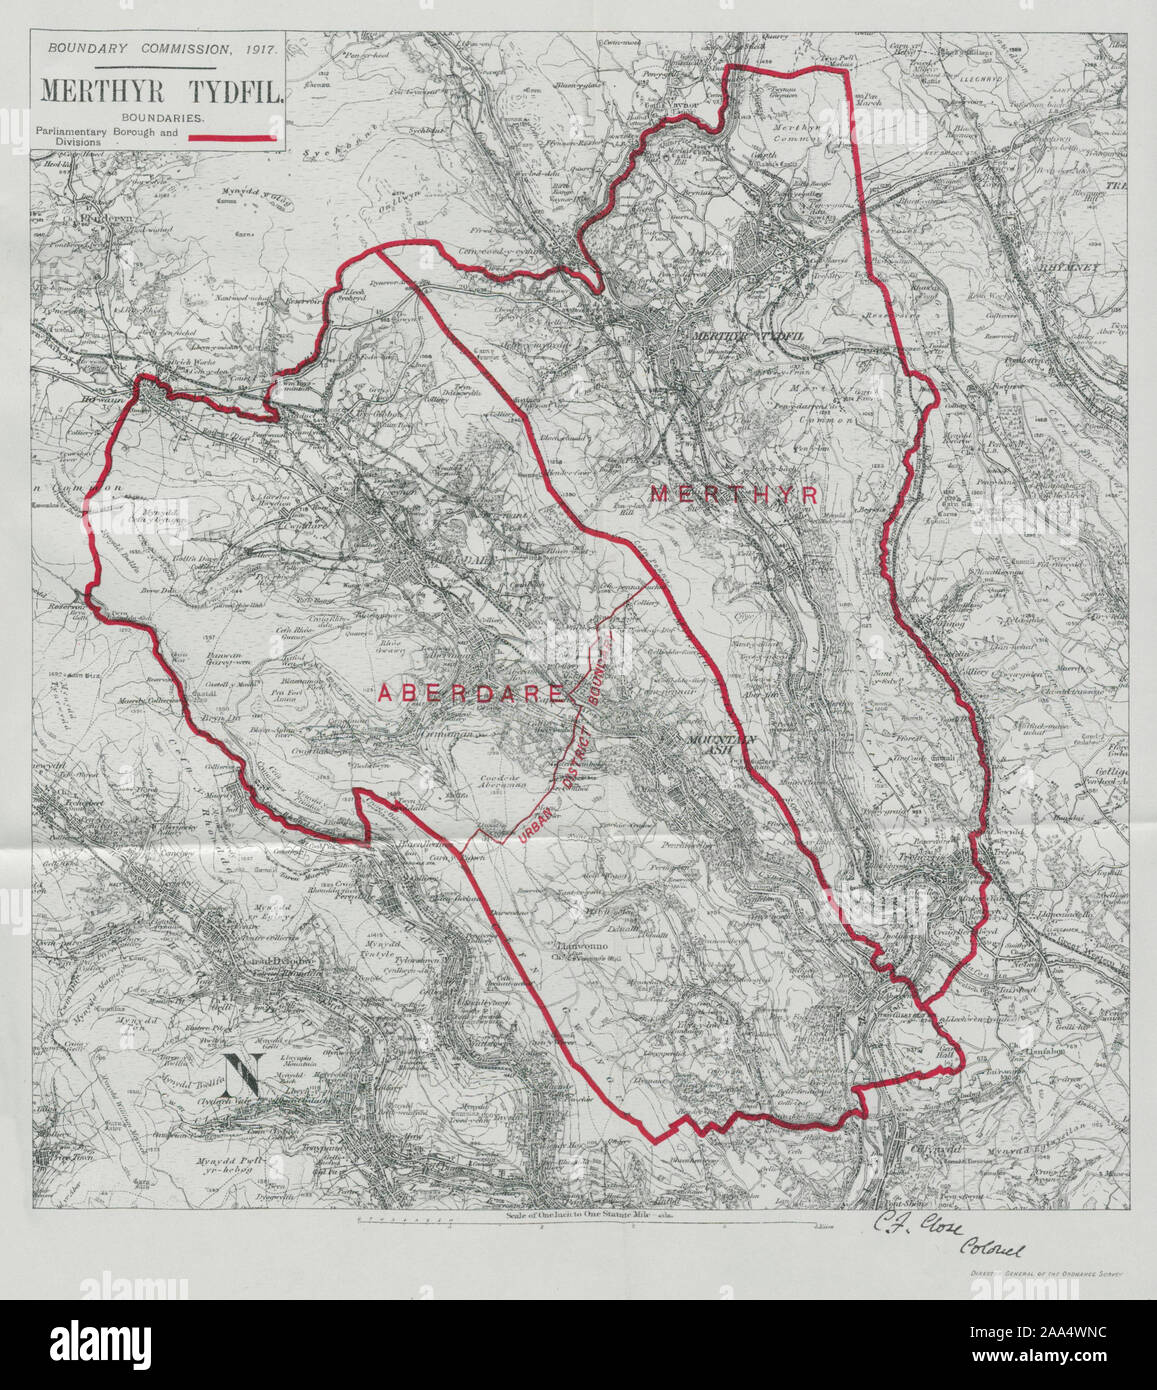 Merthyr Tydfil Parliamentary Borough. Aberdare. BOUNDARY COMMISSION 1917 map Stock Photo